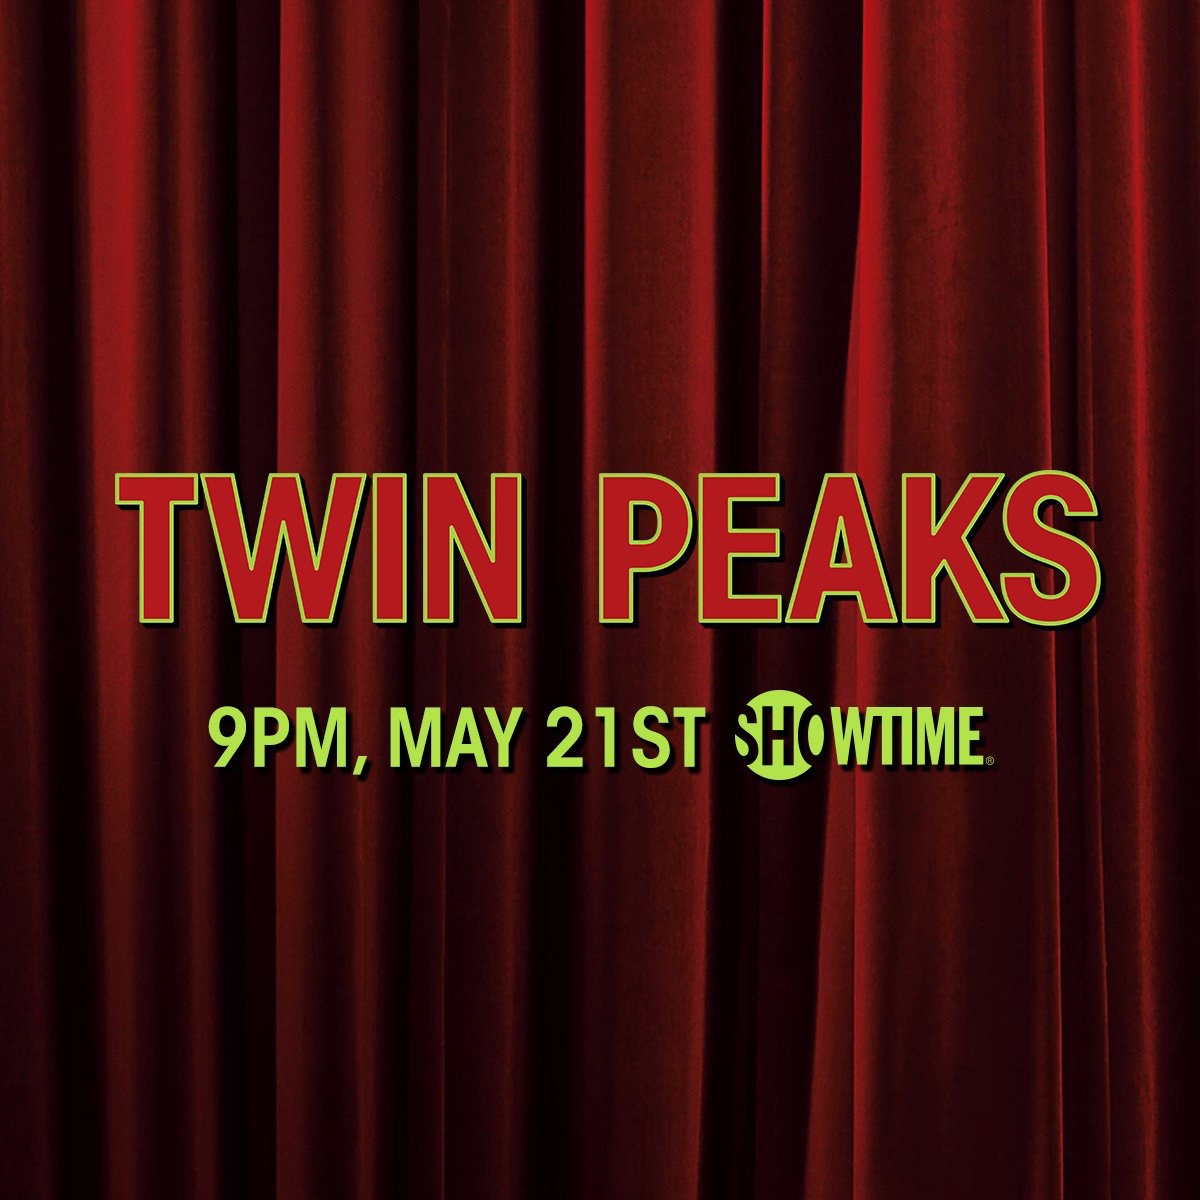 Twin Peaks: Sky Italia manda in onda per errore le prime due puntate